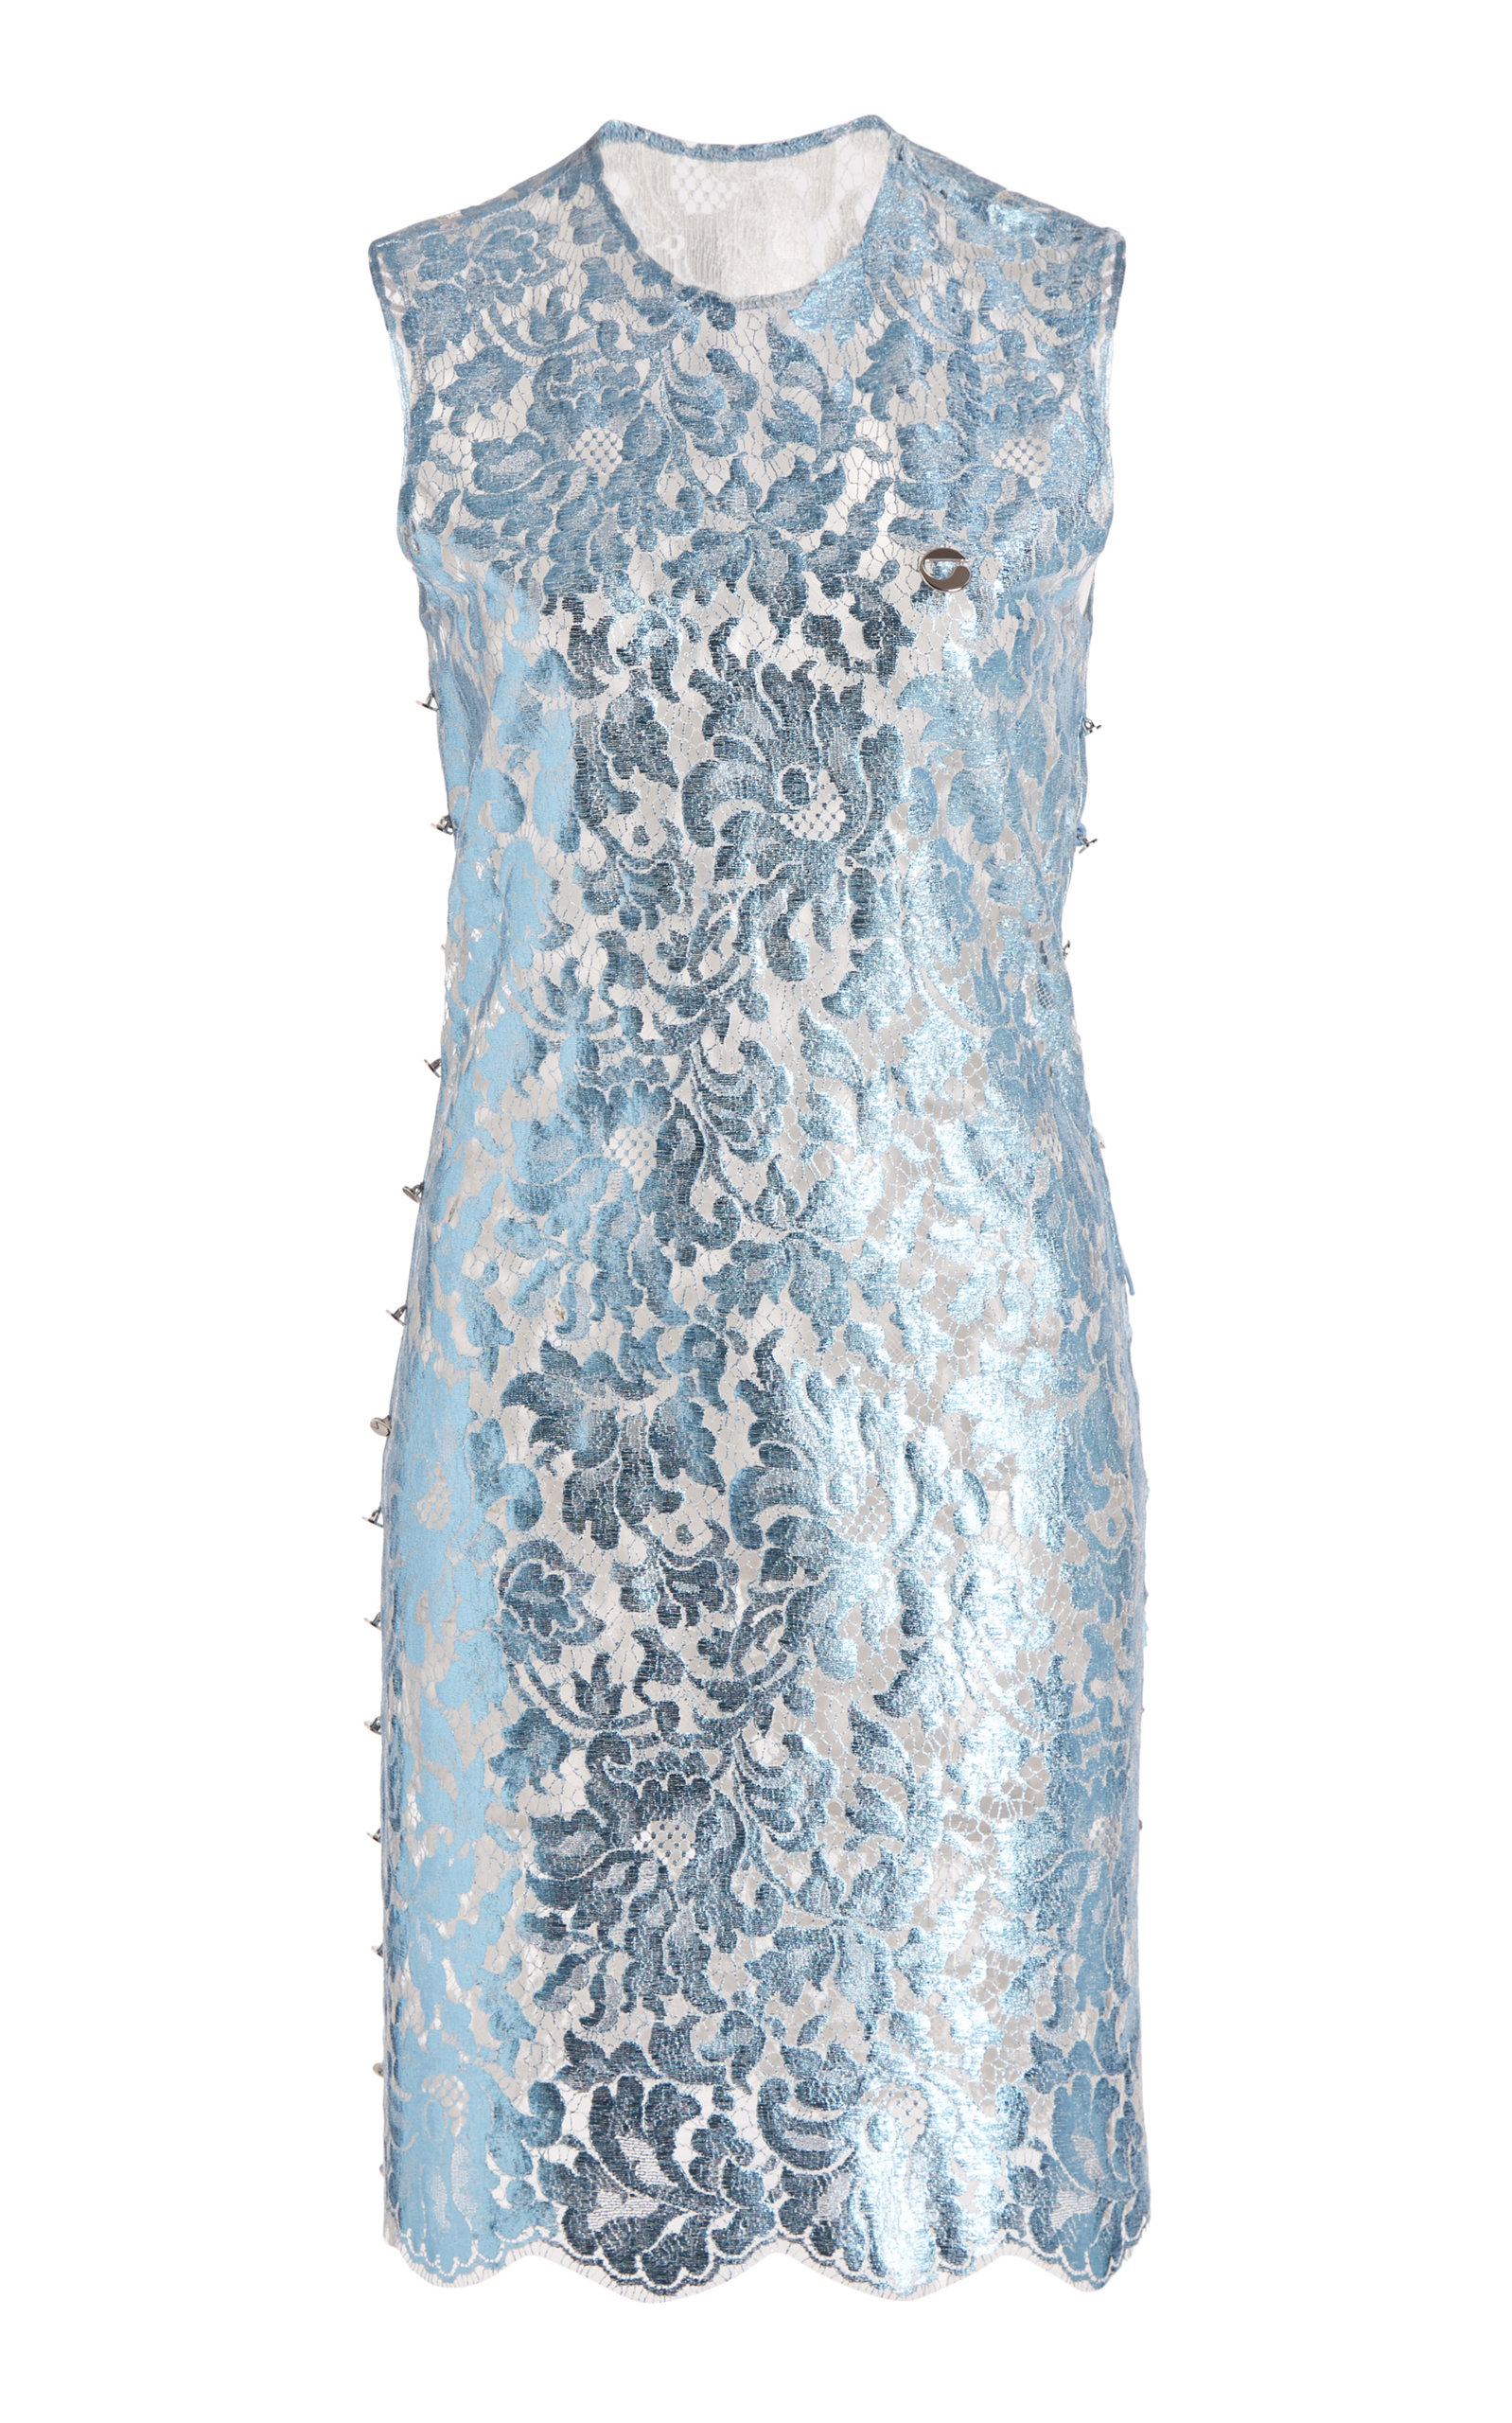 Coperni - Women's Metallic Lace Mini Dress - Blue - Only At Moda Operandi